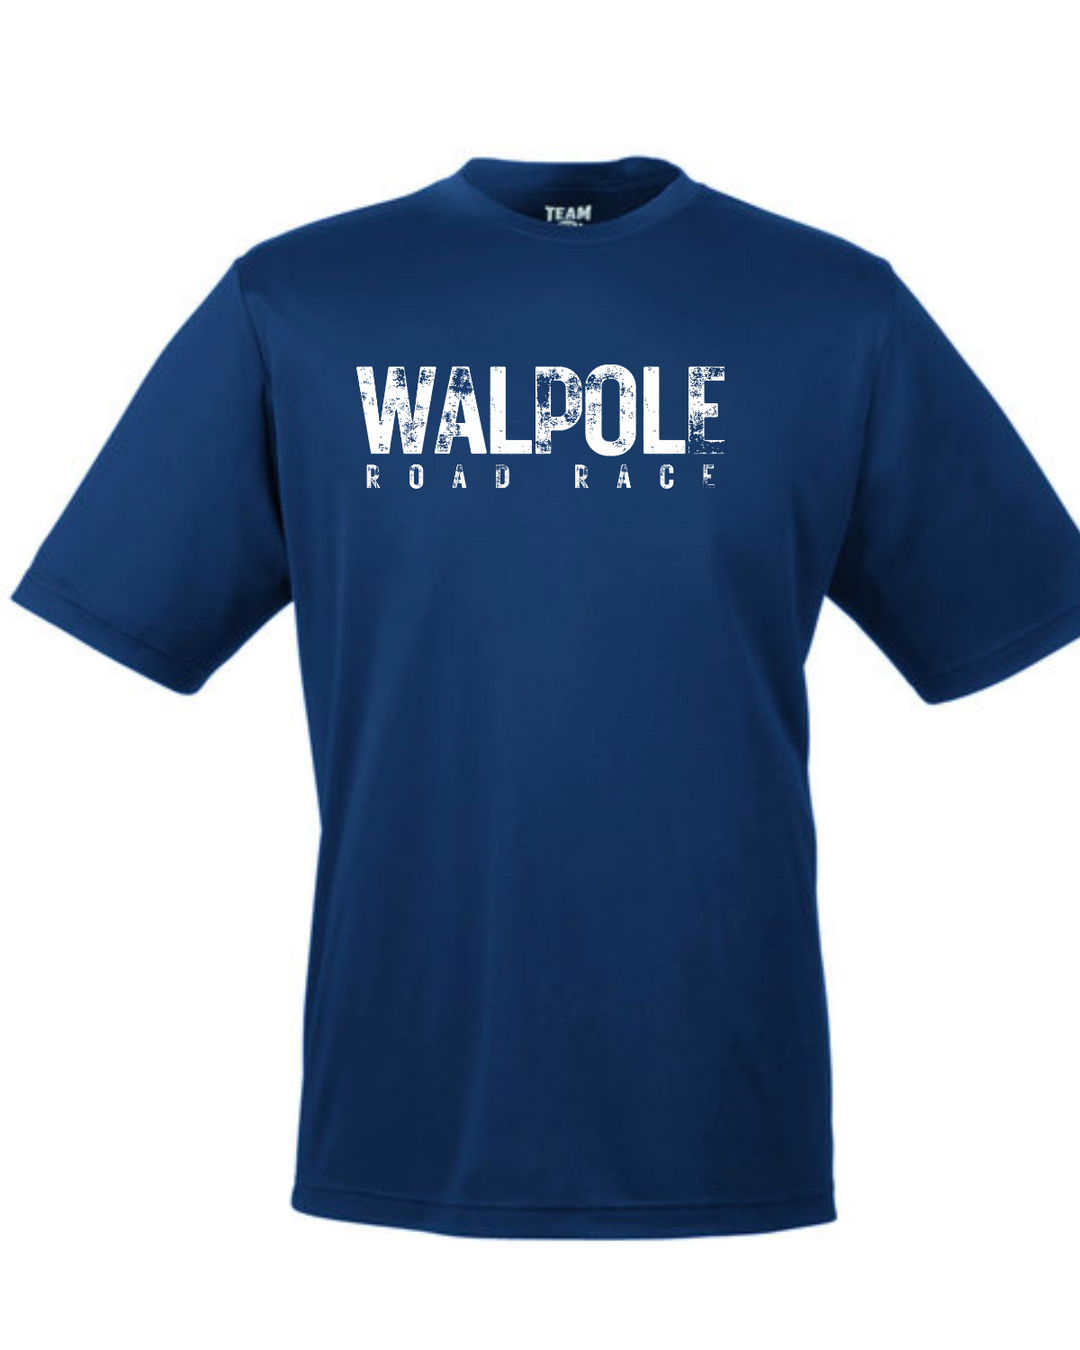 Walpole Labor Day Road Race Unisex Zone Performance T-Shirt (TT11)